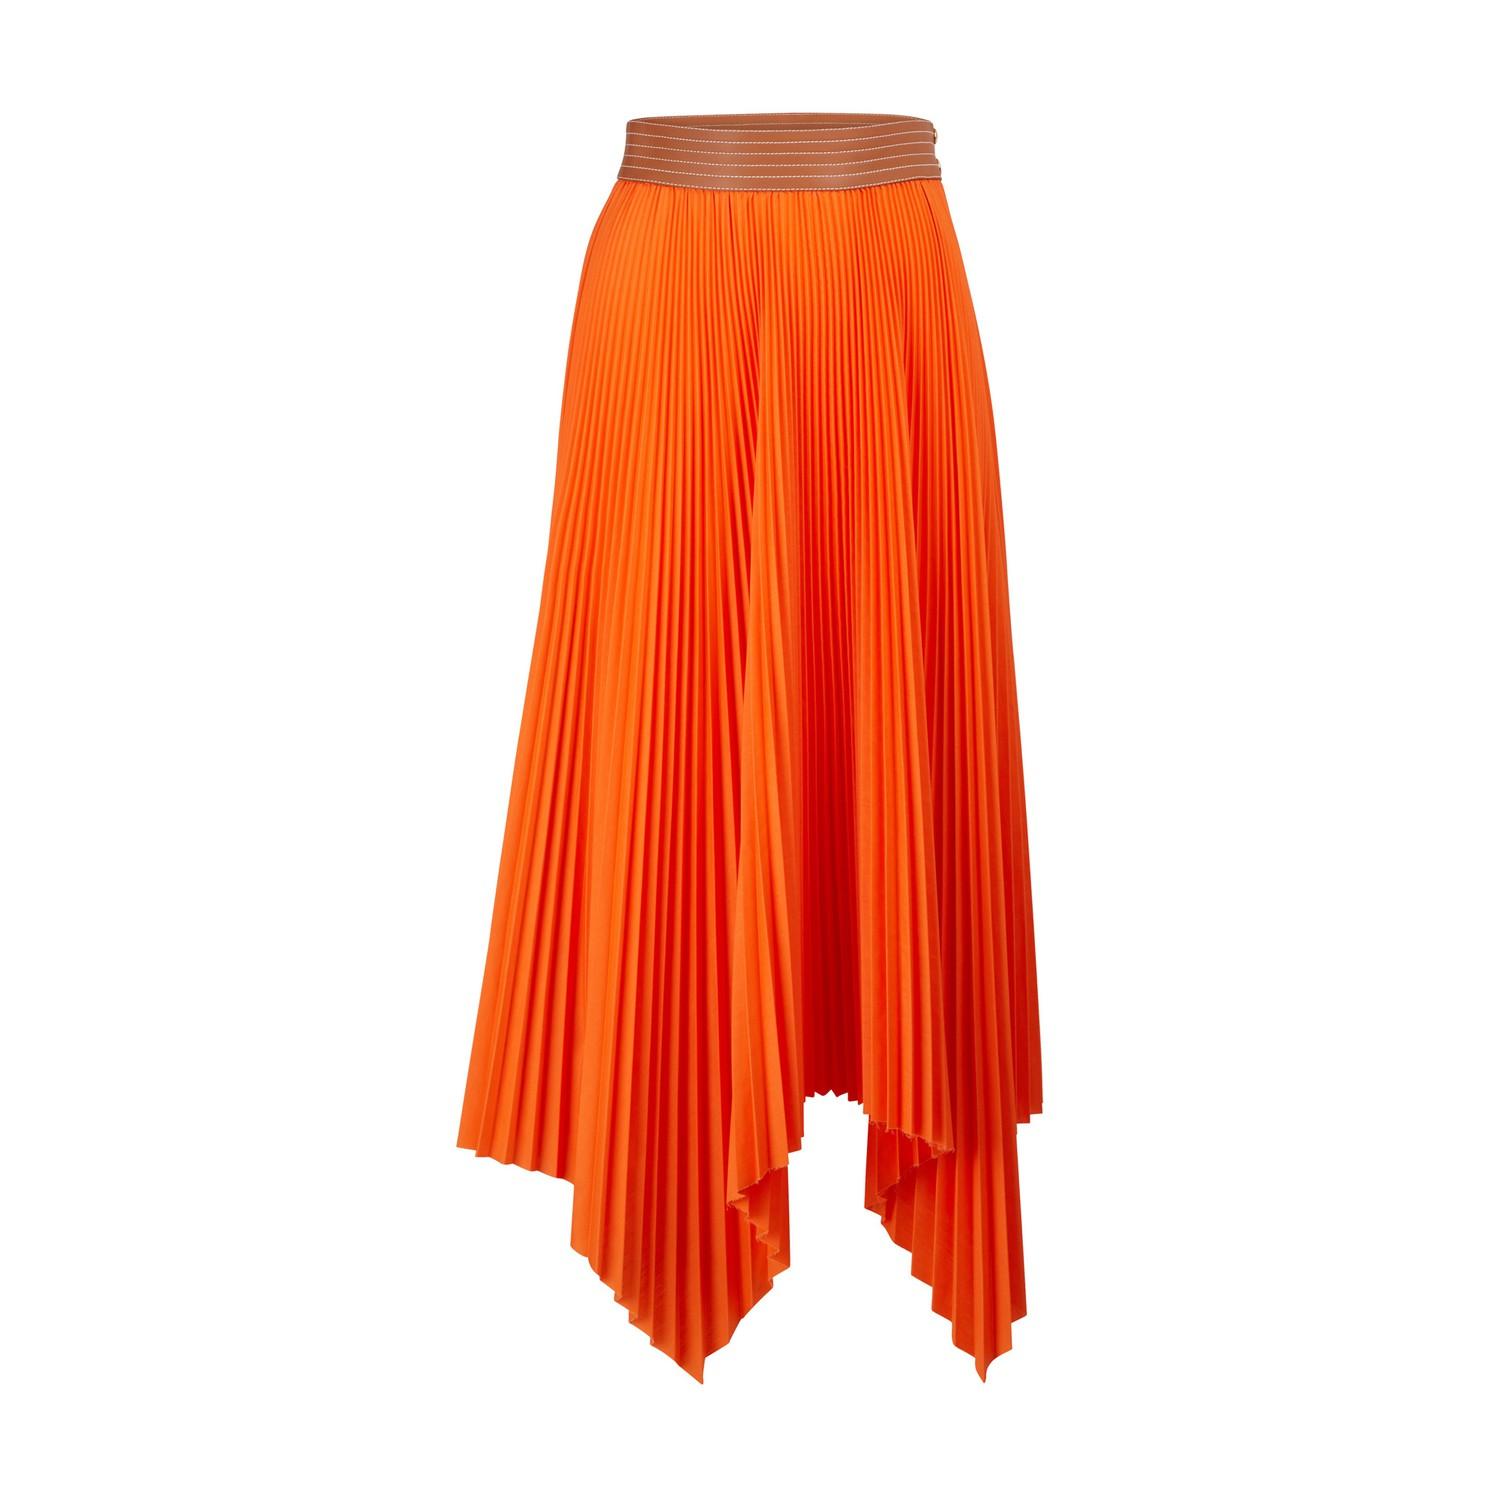 Loewe Cotton Pleated Skirt in Orange - Save 68% - Lyst